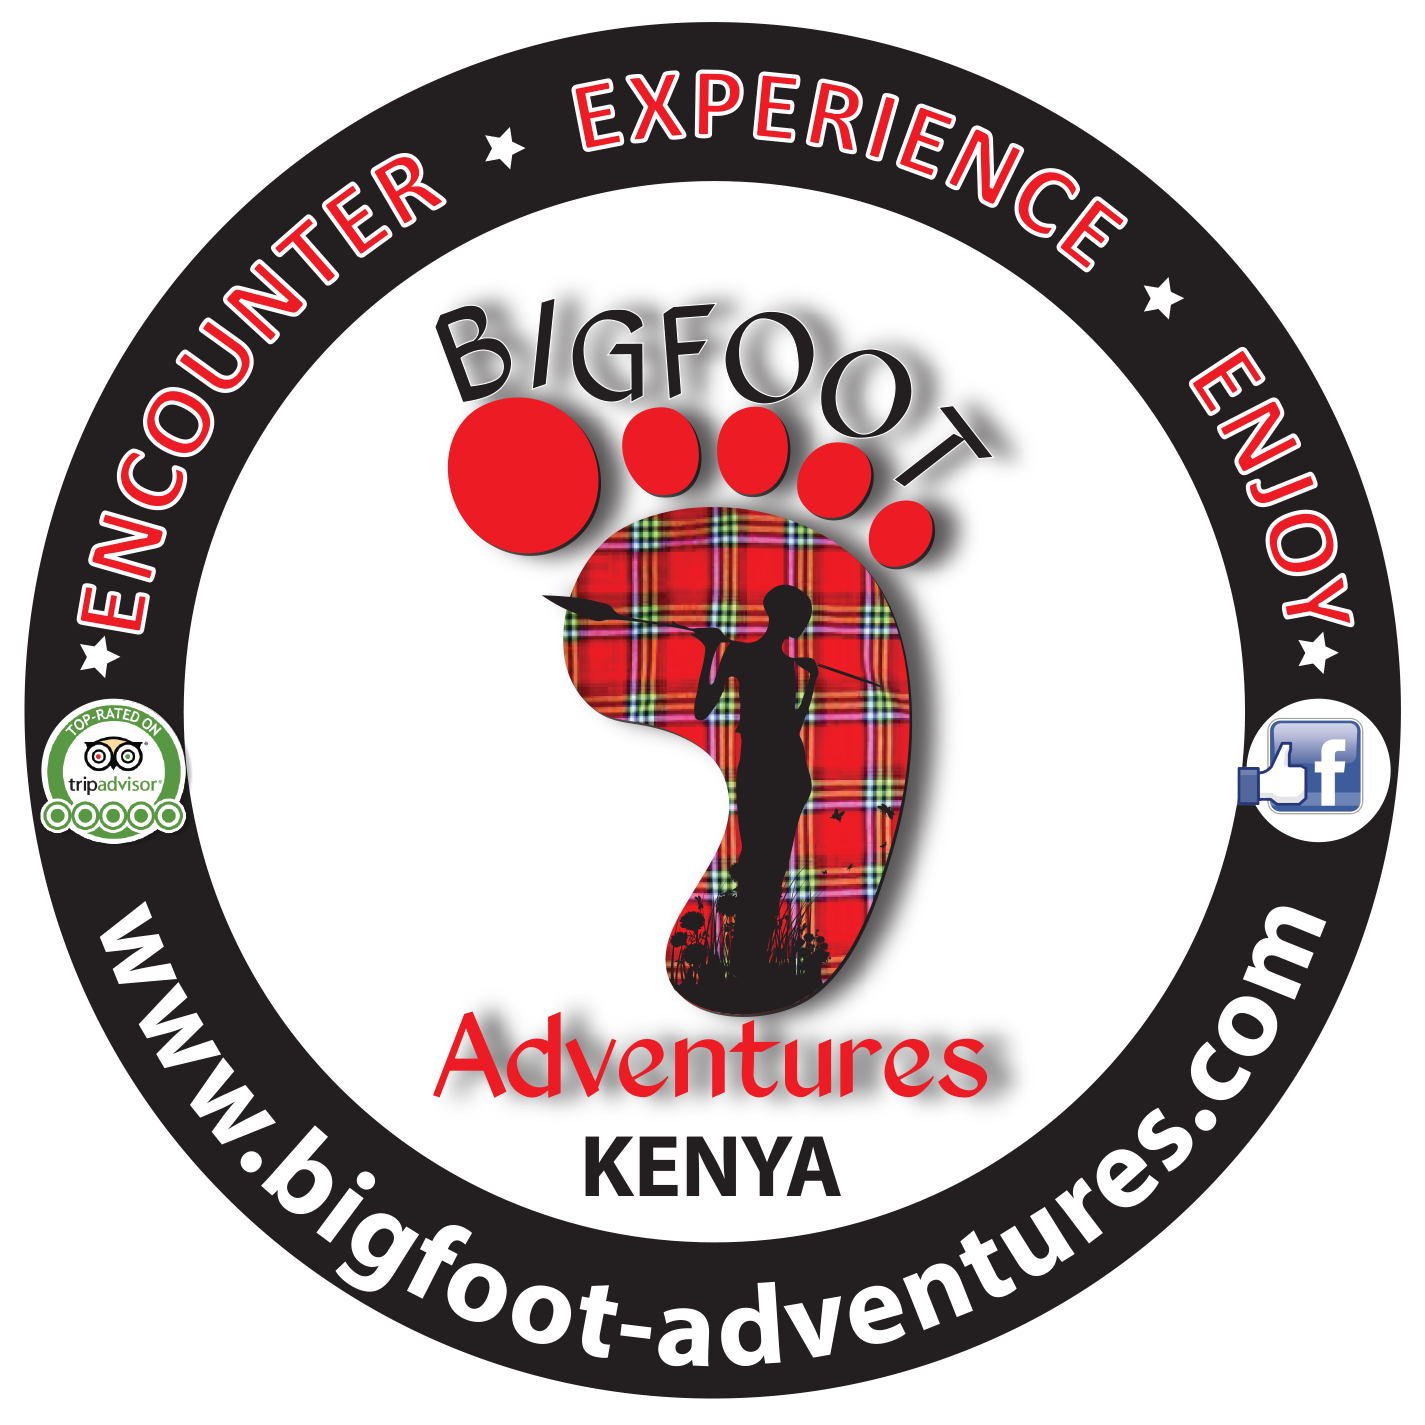 Bigfoot Adventures Limited